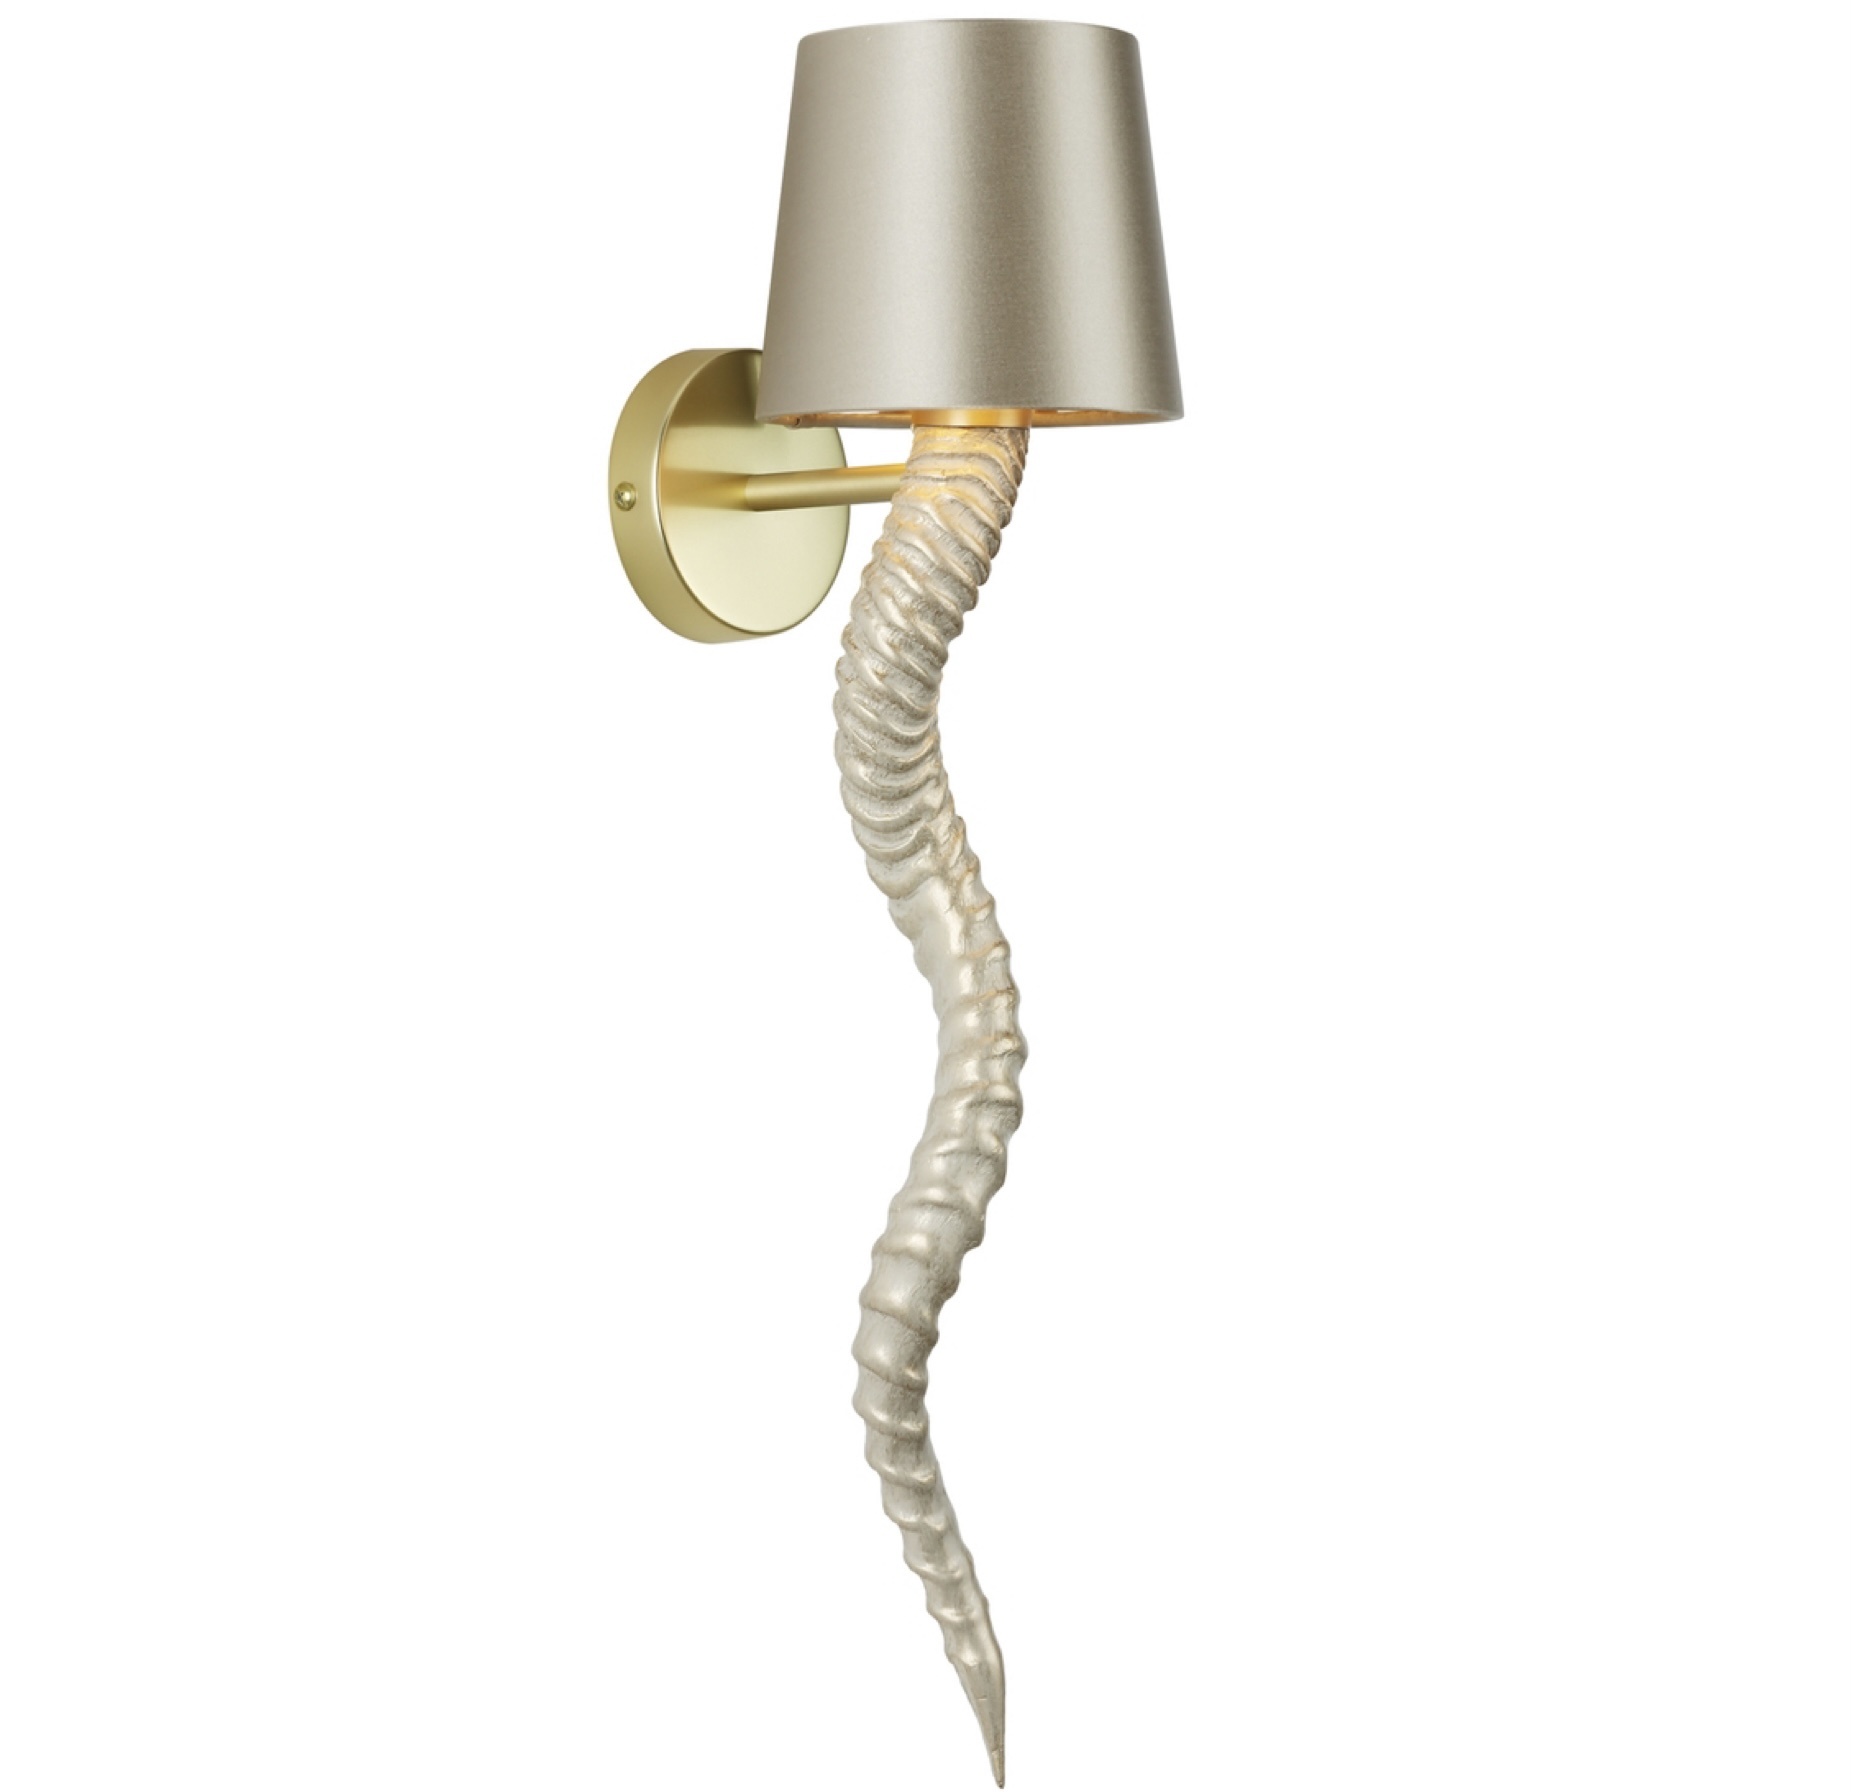 Kudu - Luxury Gold Horn Wall Light with Cream Satin Shade - David Hunt